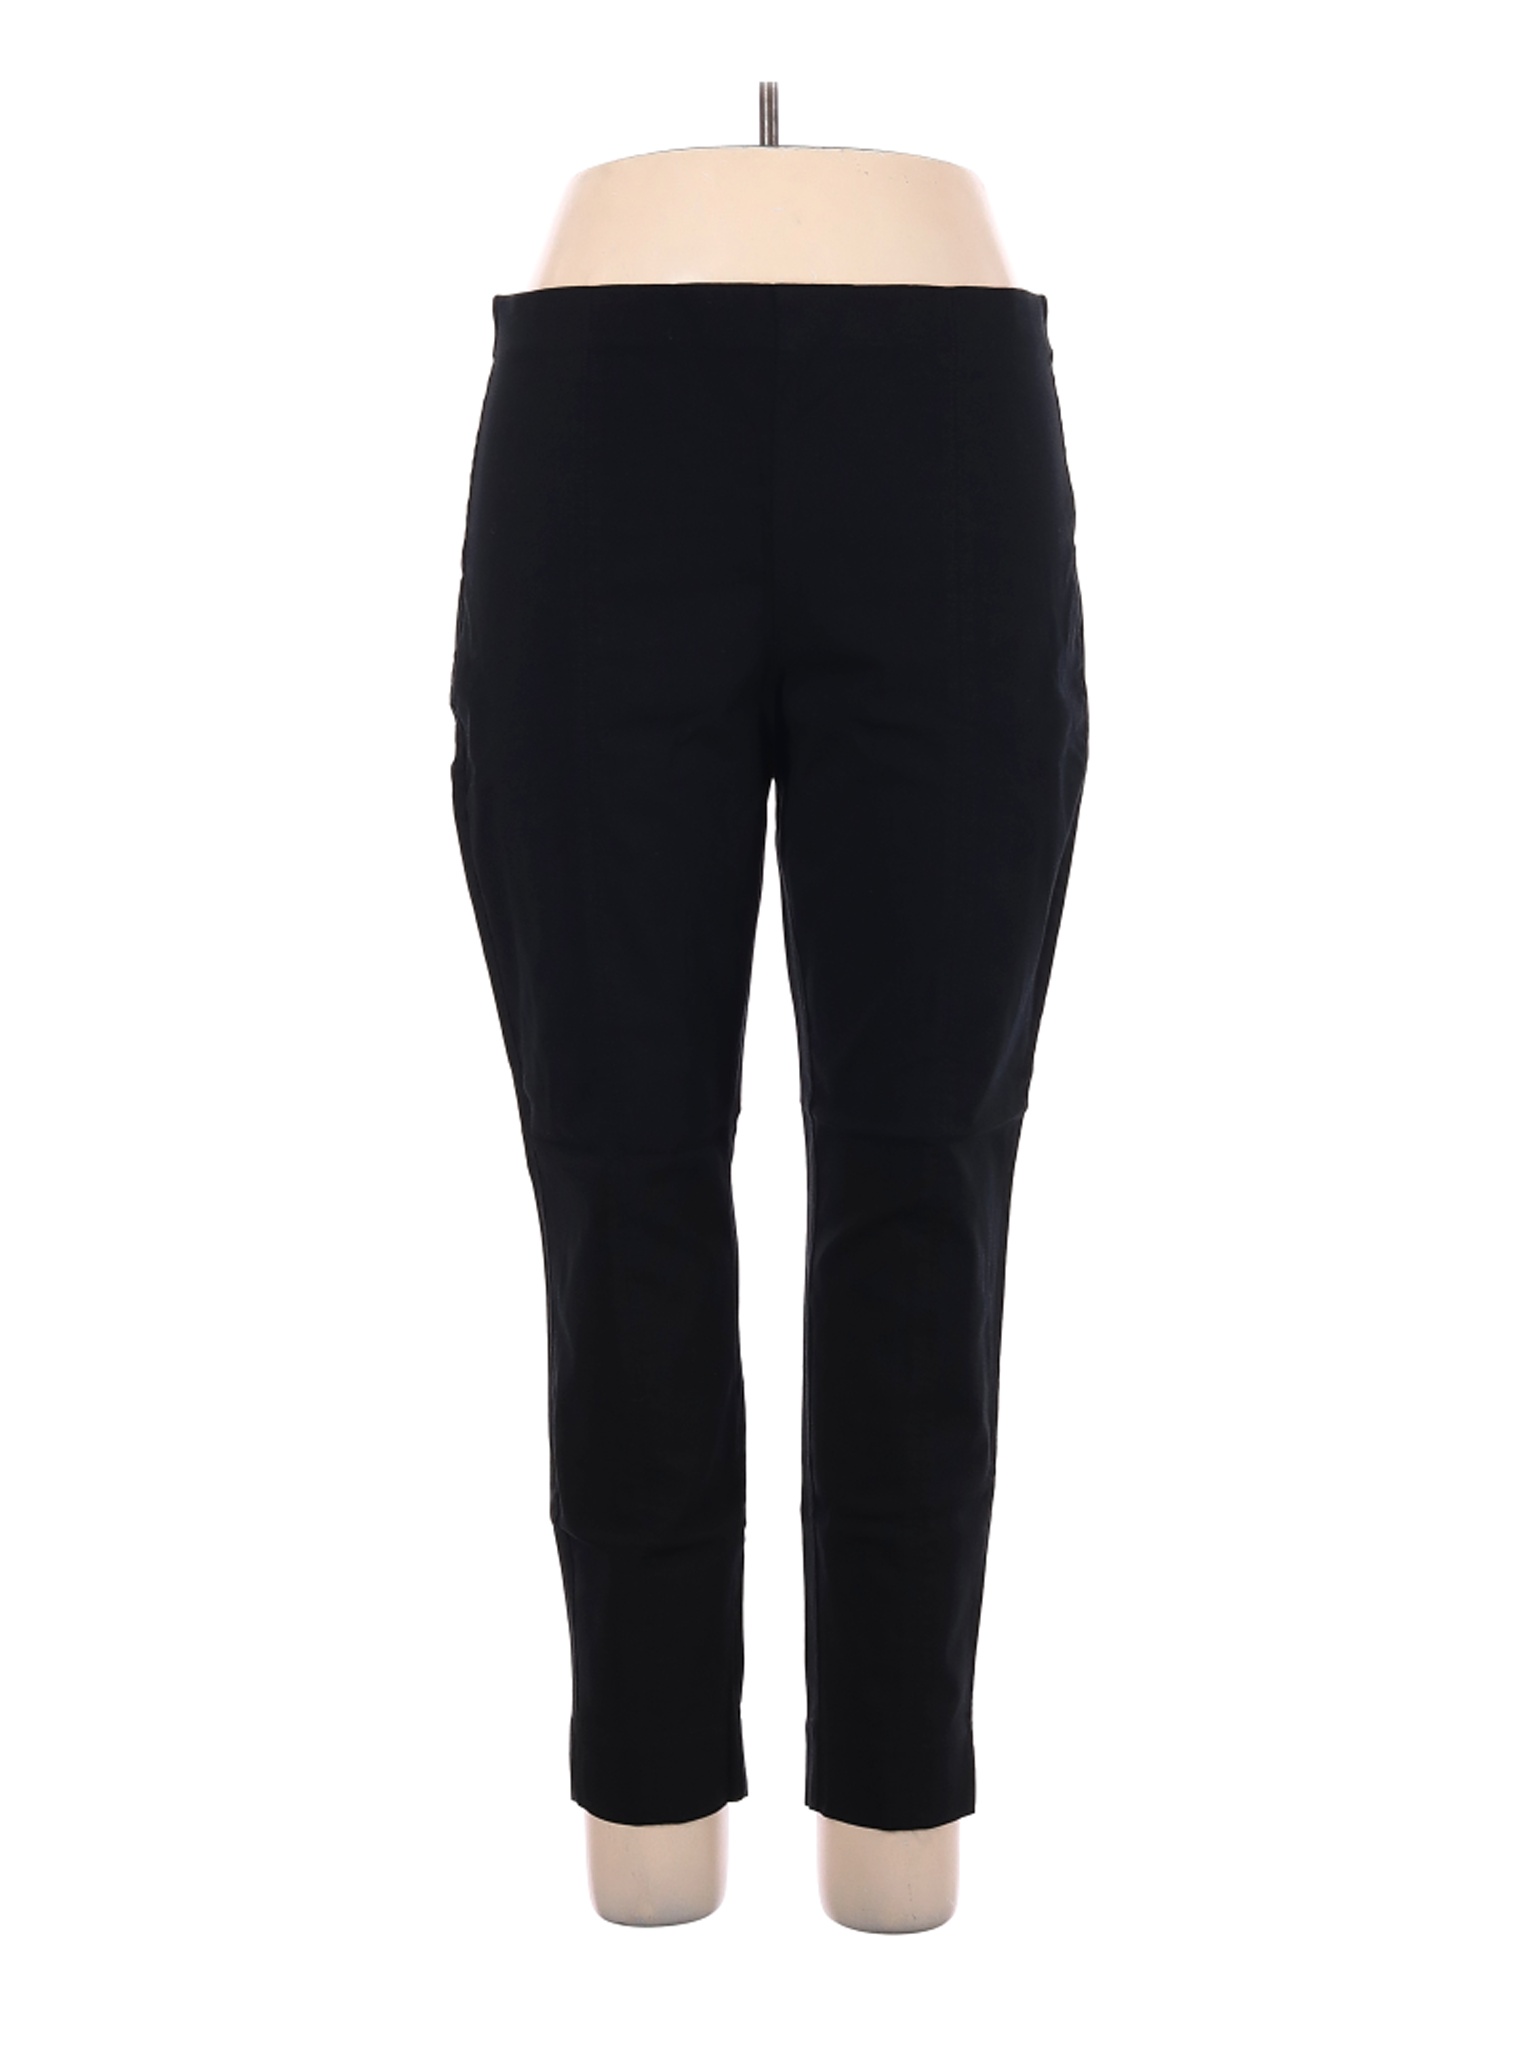 Croft & Barrow Women Black Dress Pants 18 Plus | eBay